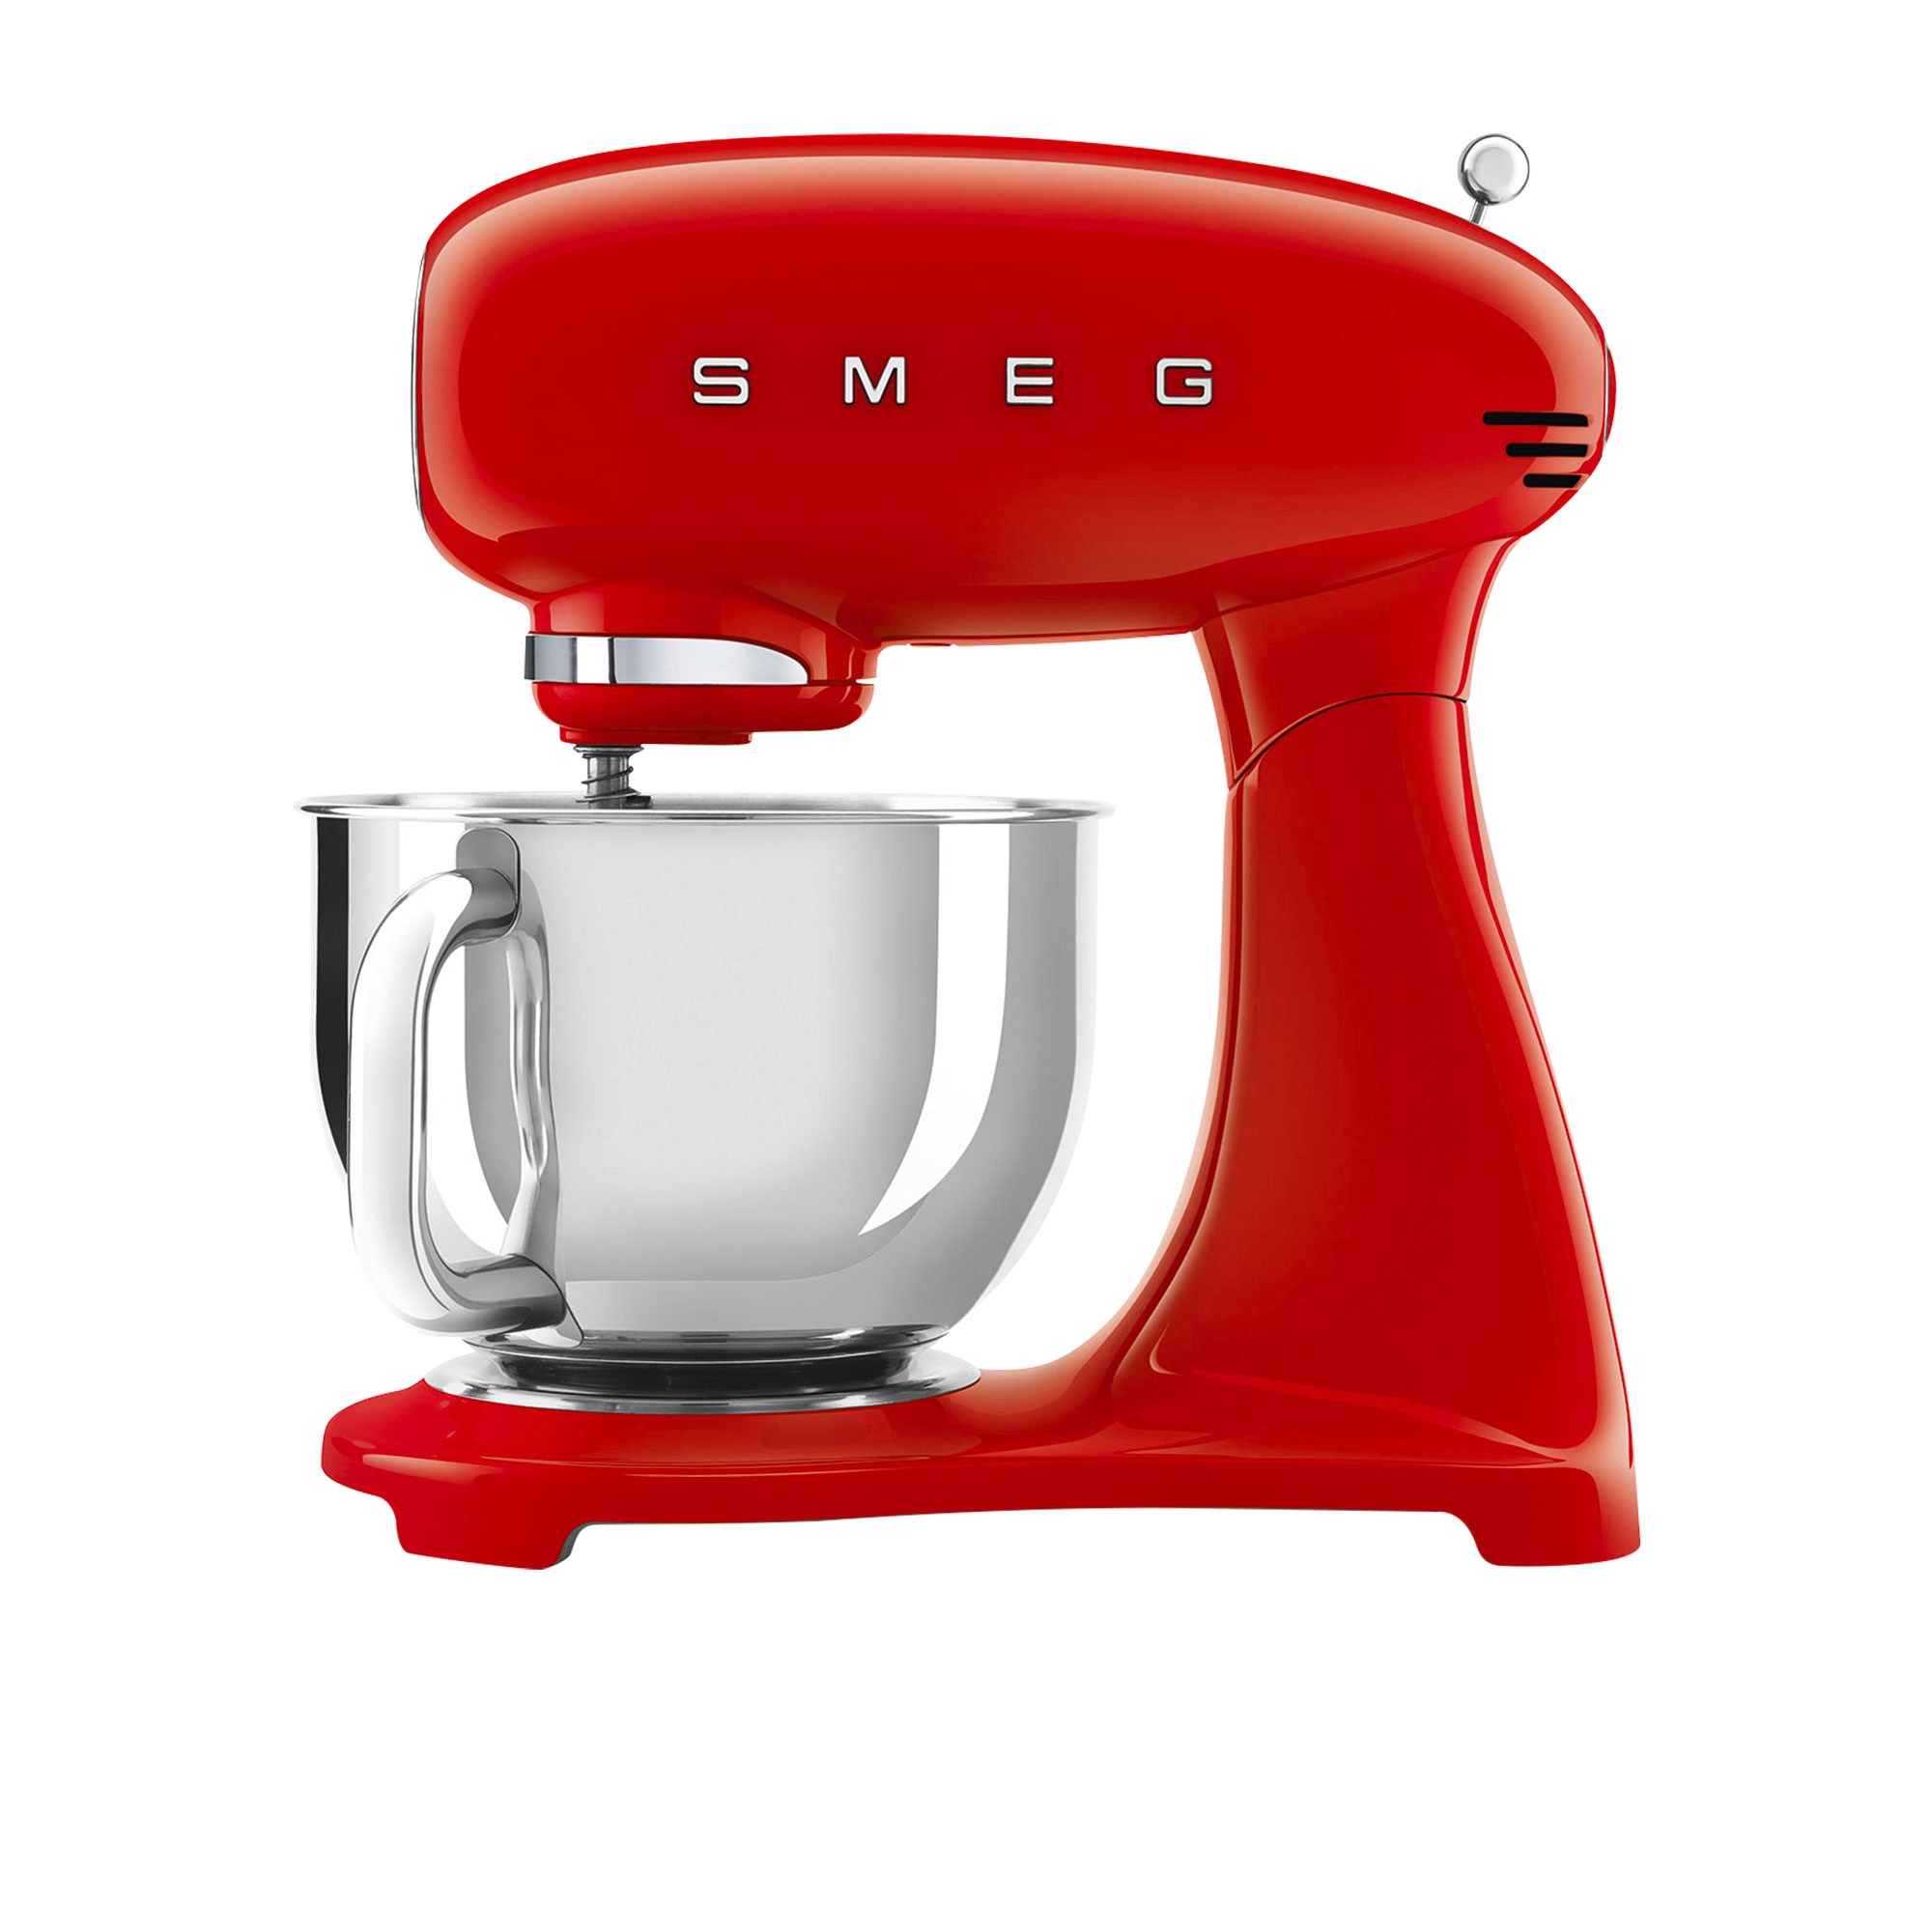 Smeg 50's Retro Style Stand Mixer Red Image 1